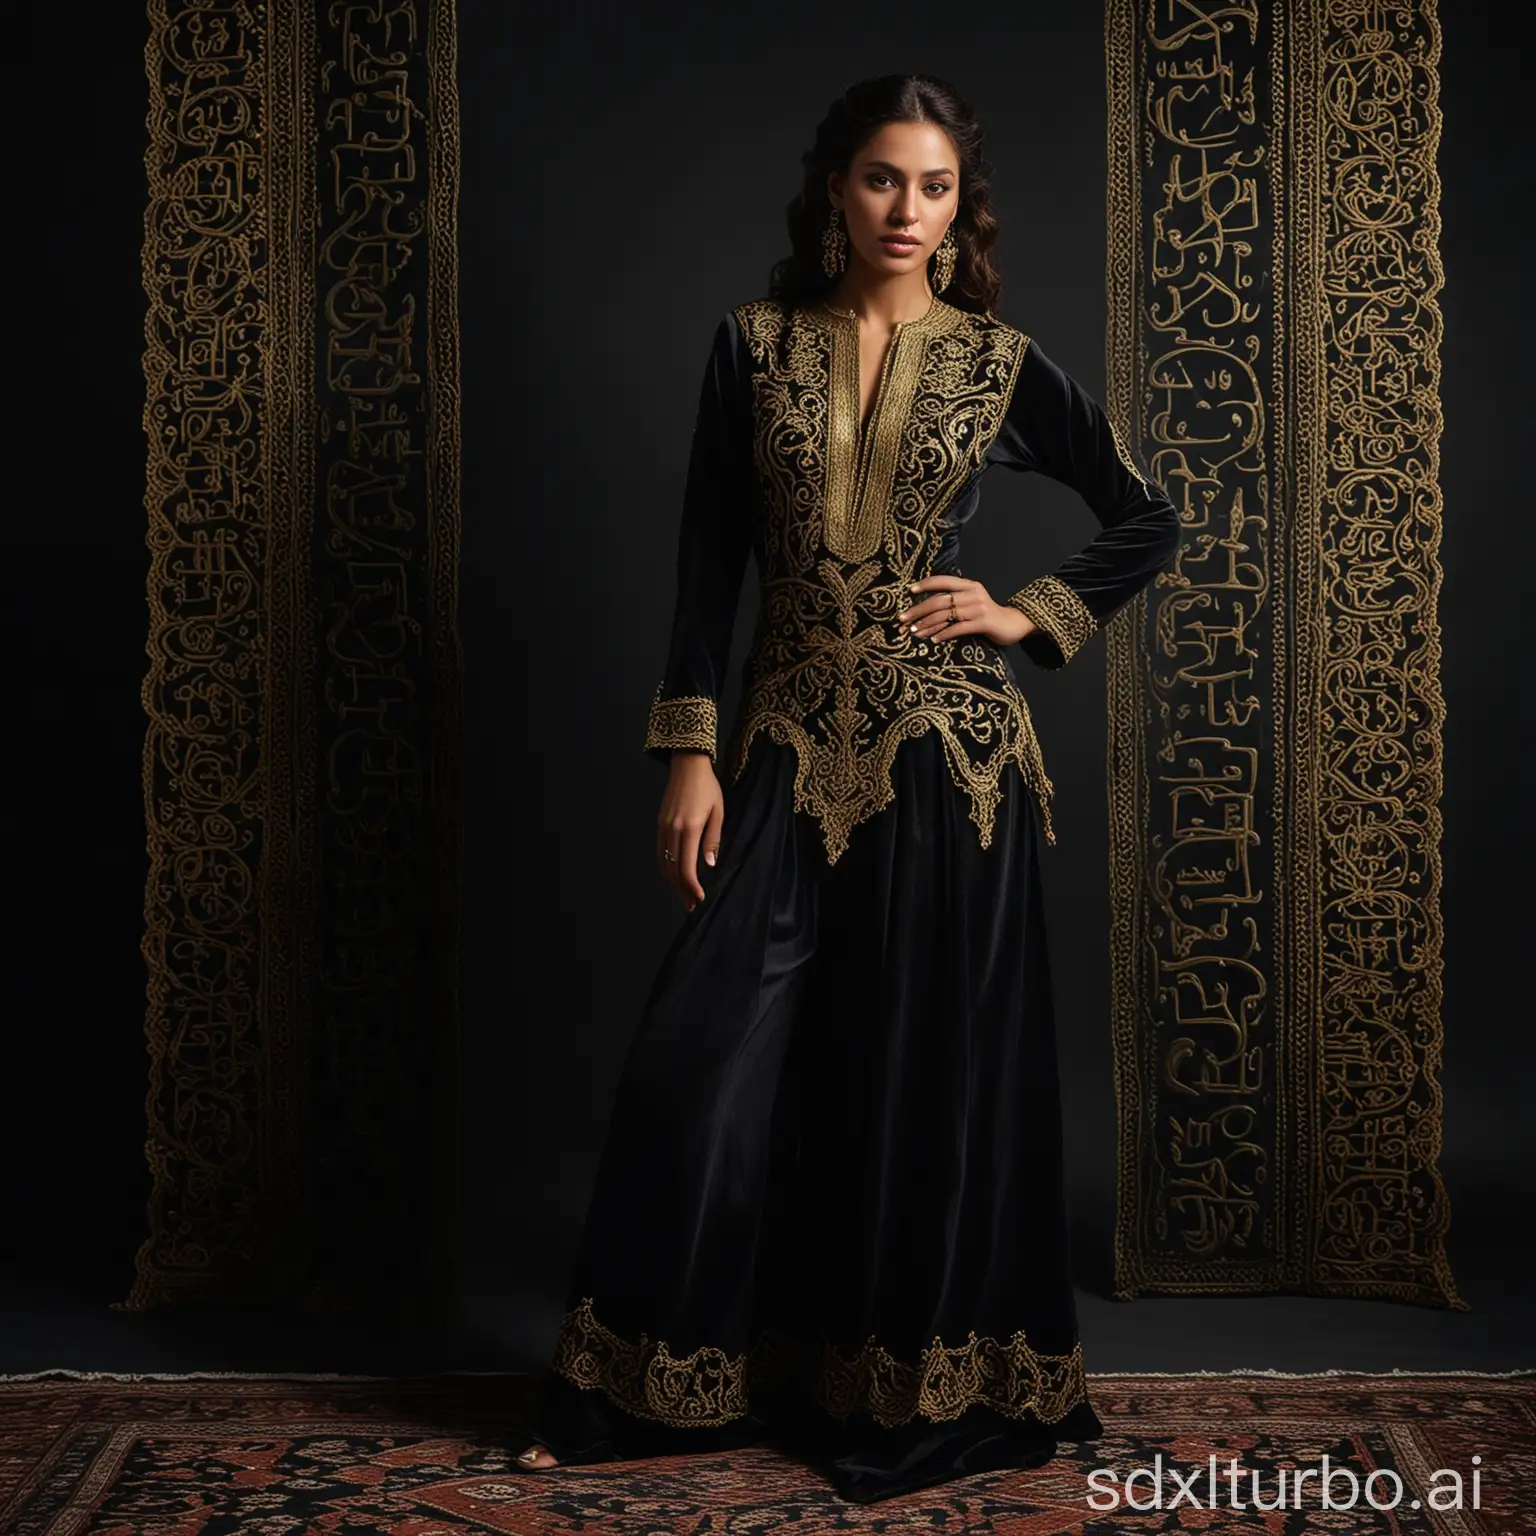 Luxurious-Mediterranean-Amazigh-Fashion-Intricate-Gold-Lace-Dress-by-Hassan-Hajjaj